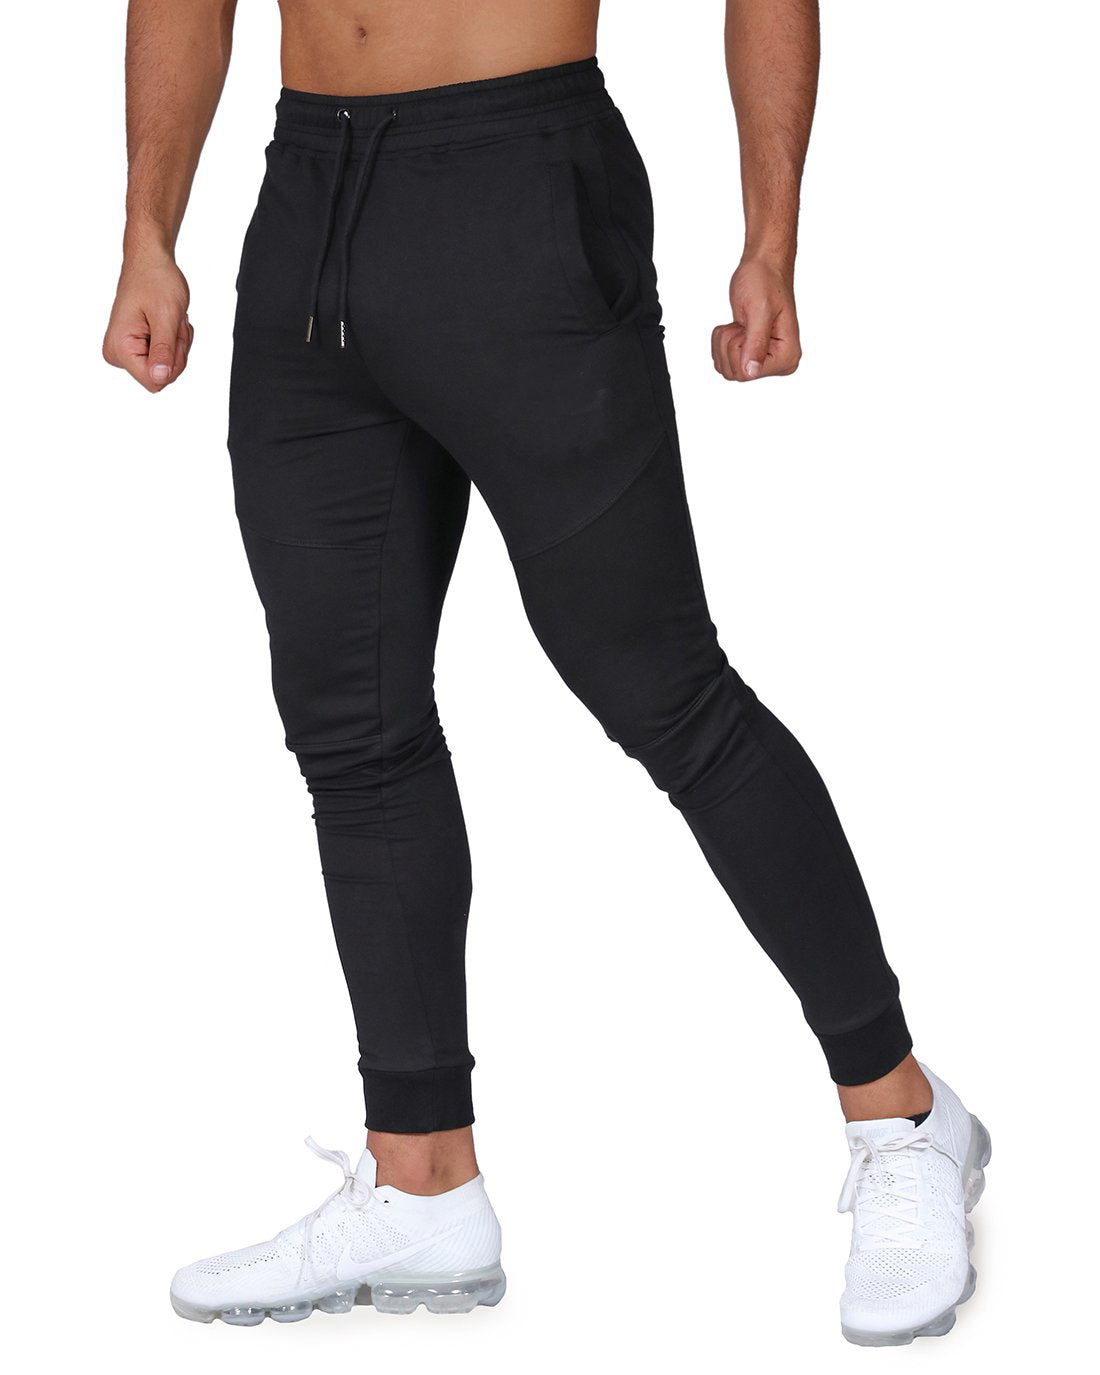 Zenith Men's Gym/Joggers pants - Ink Black